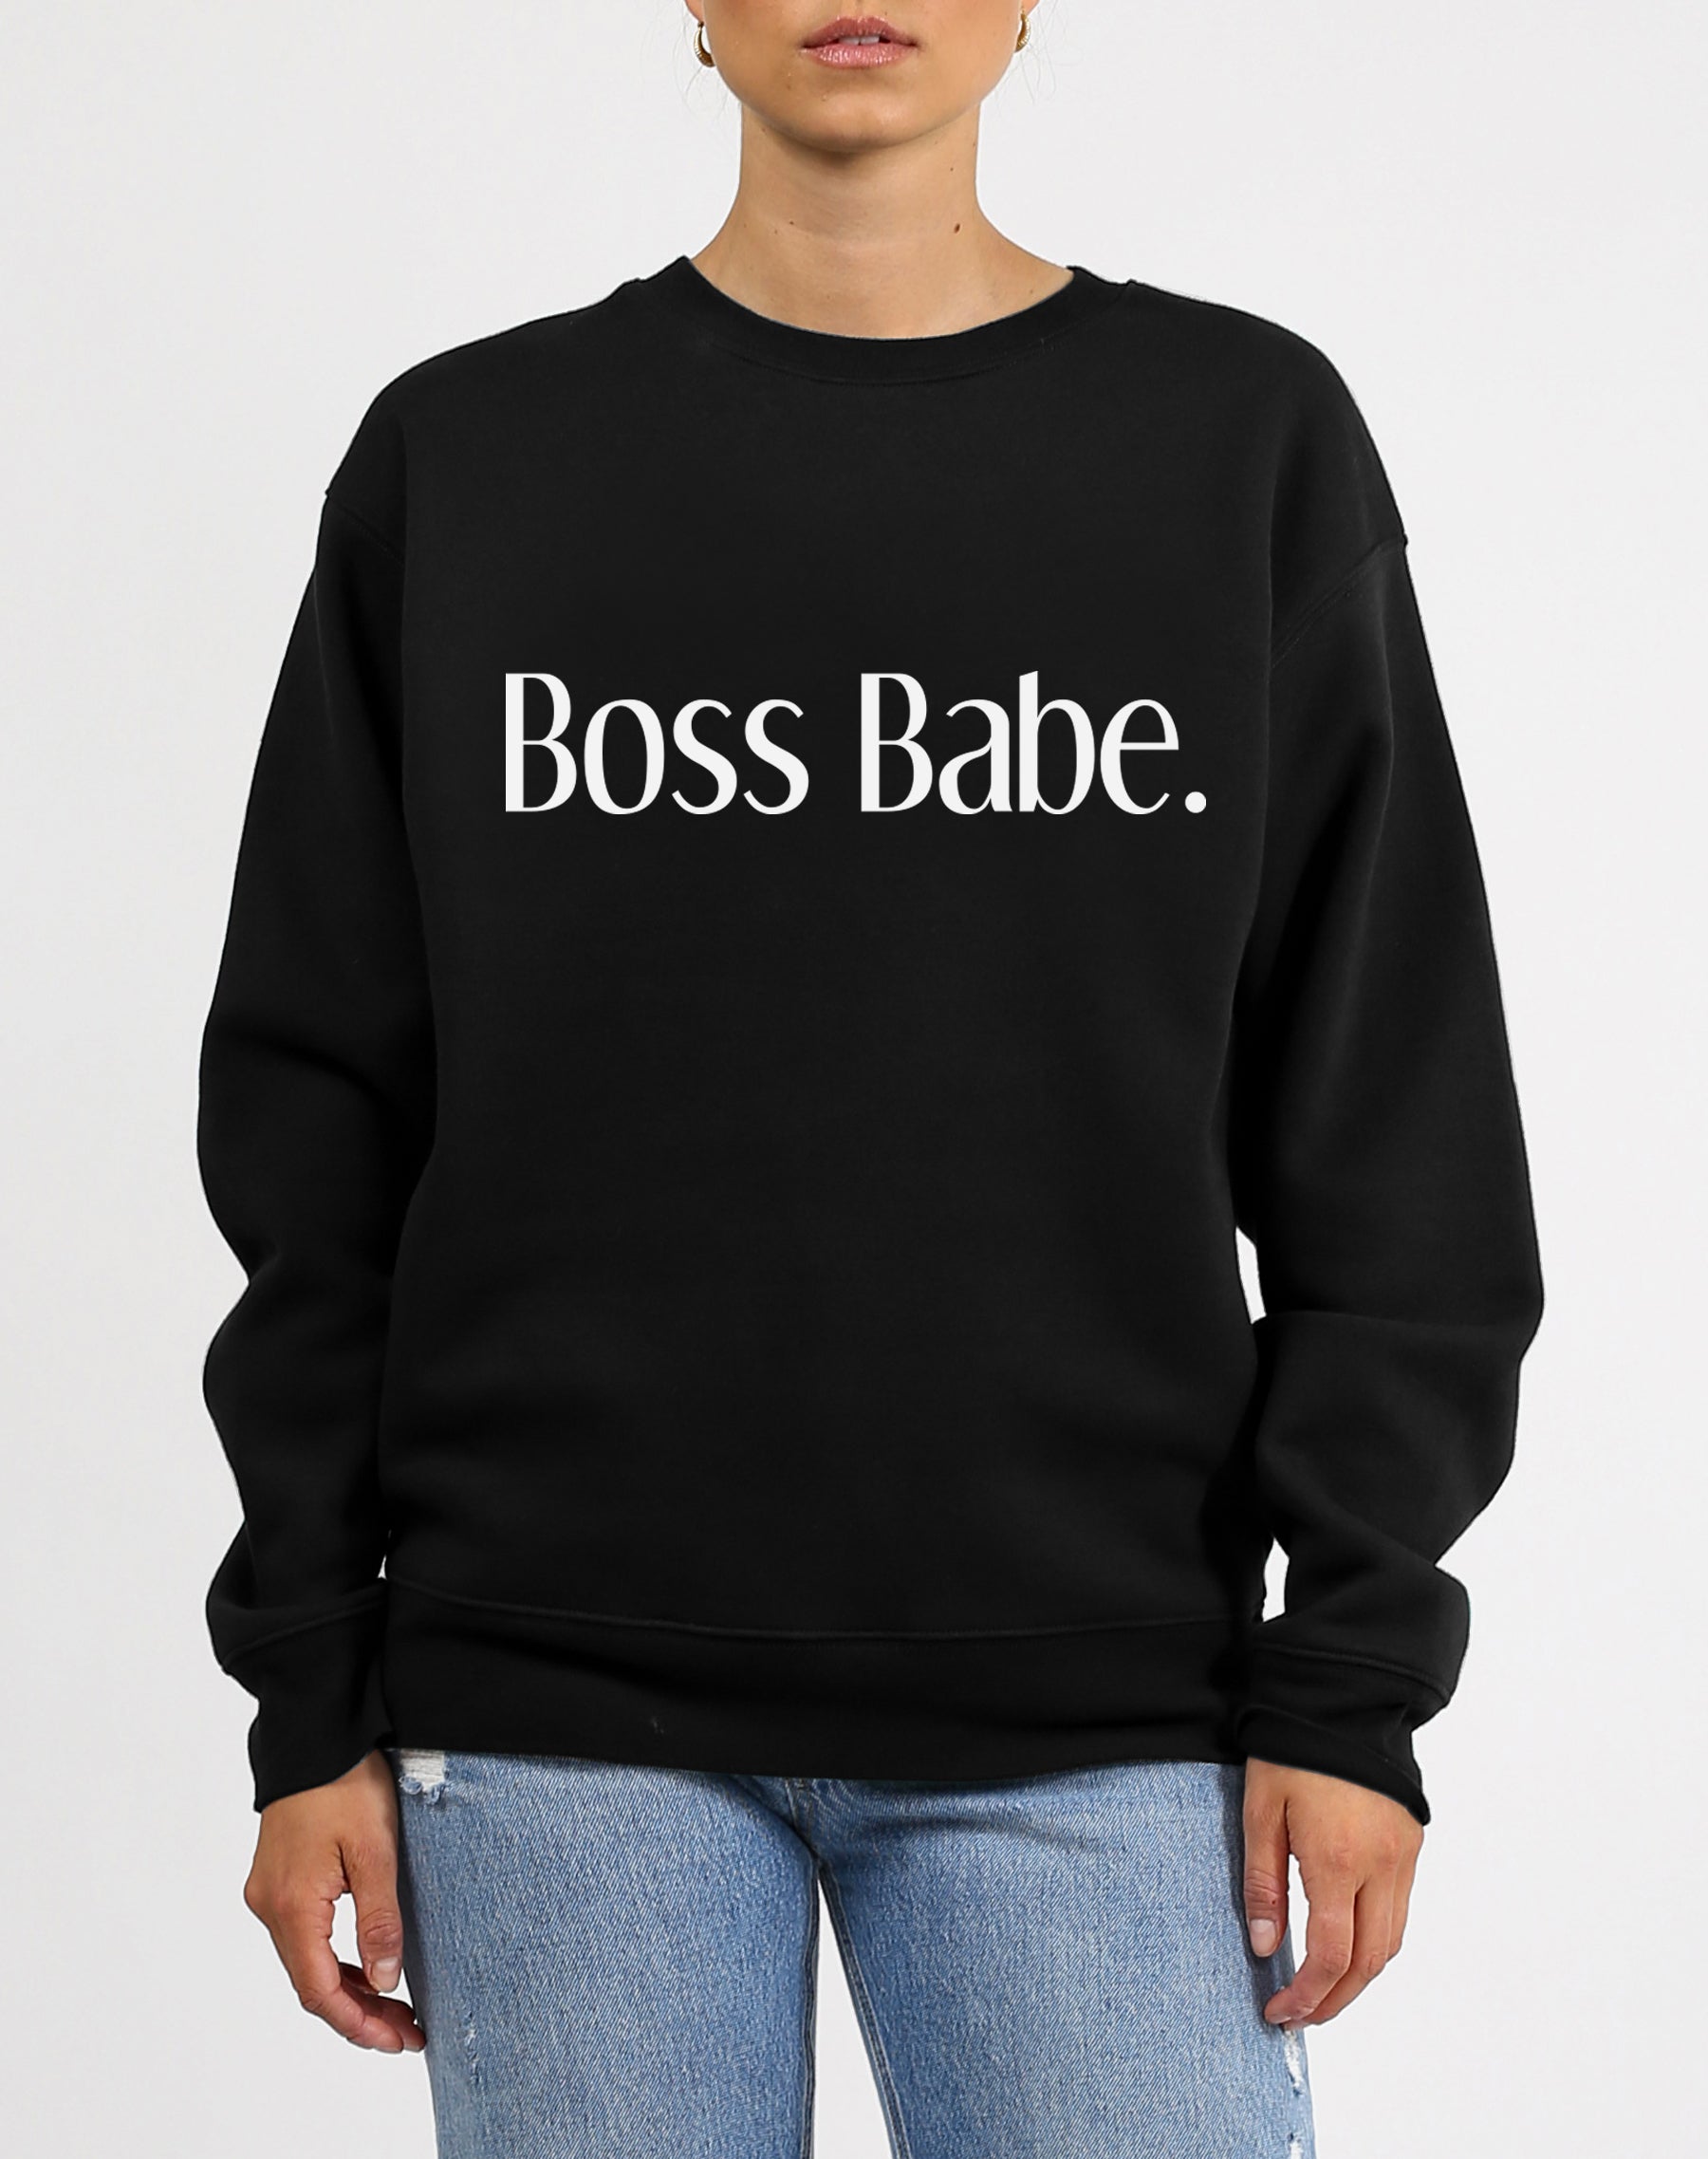 boss babe clothing